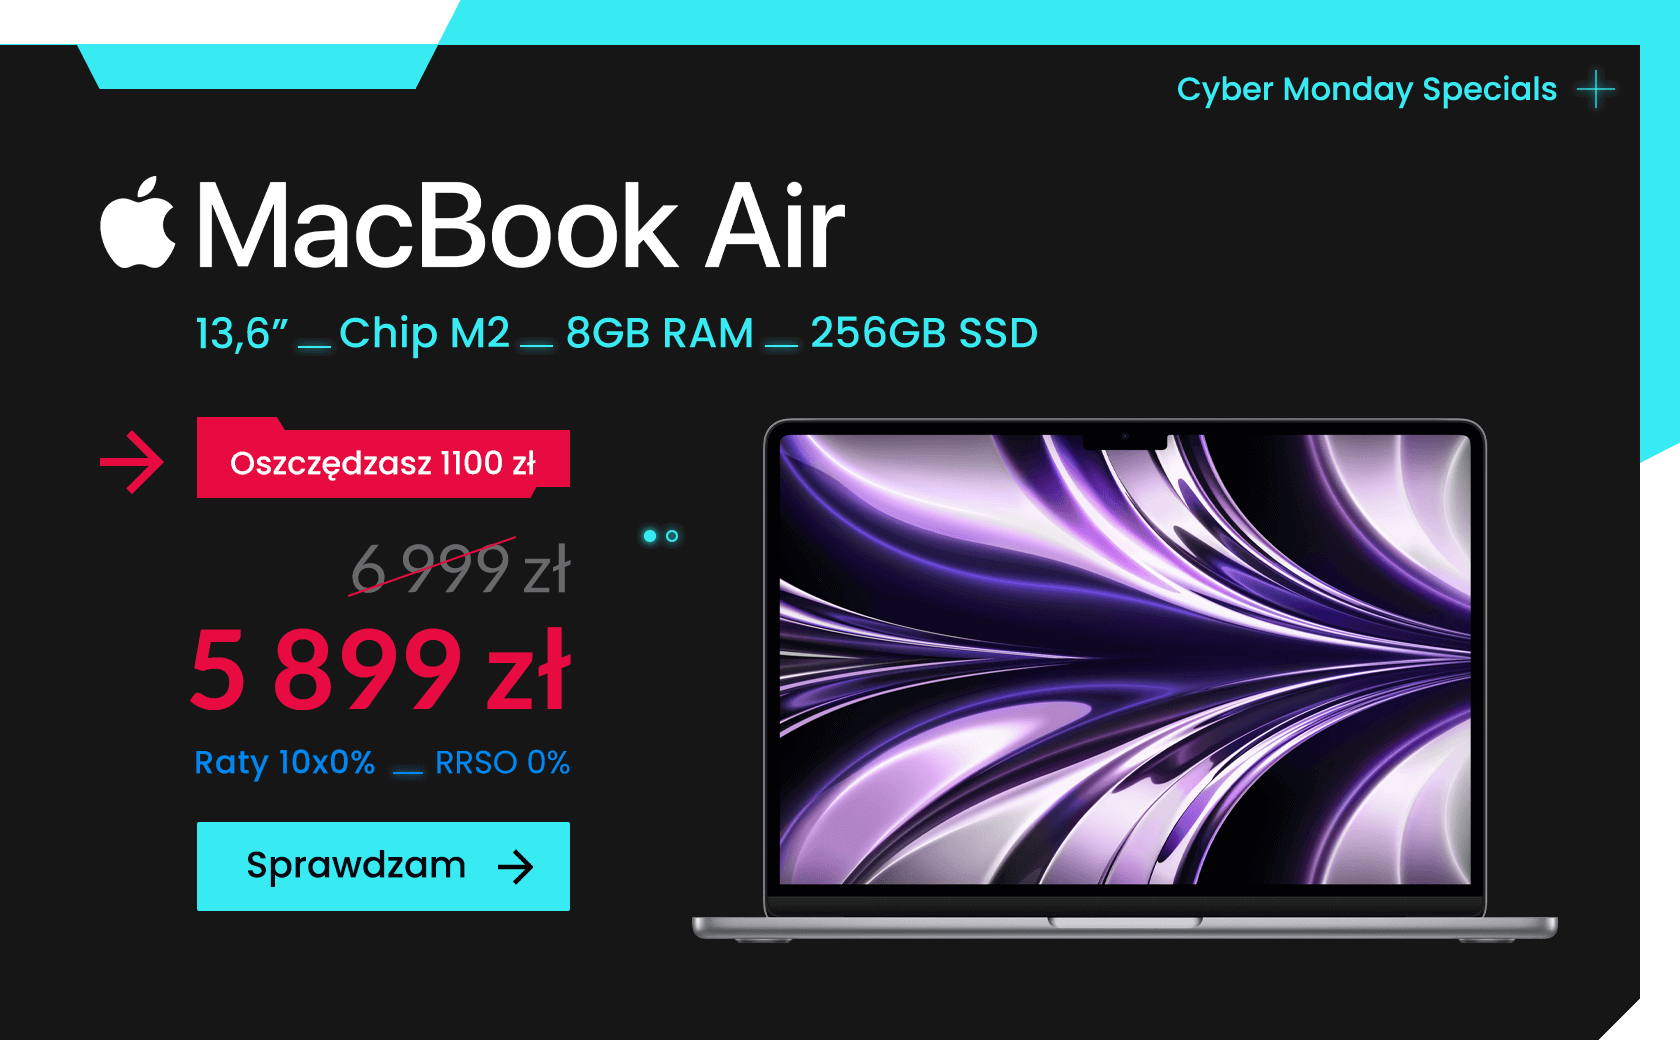 Cyber Monday Specials - MacBook Air M2